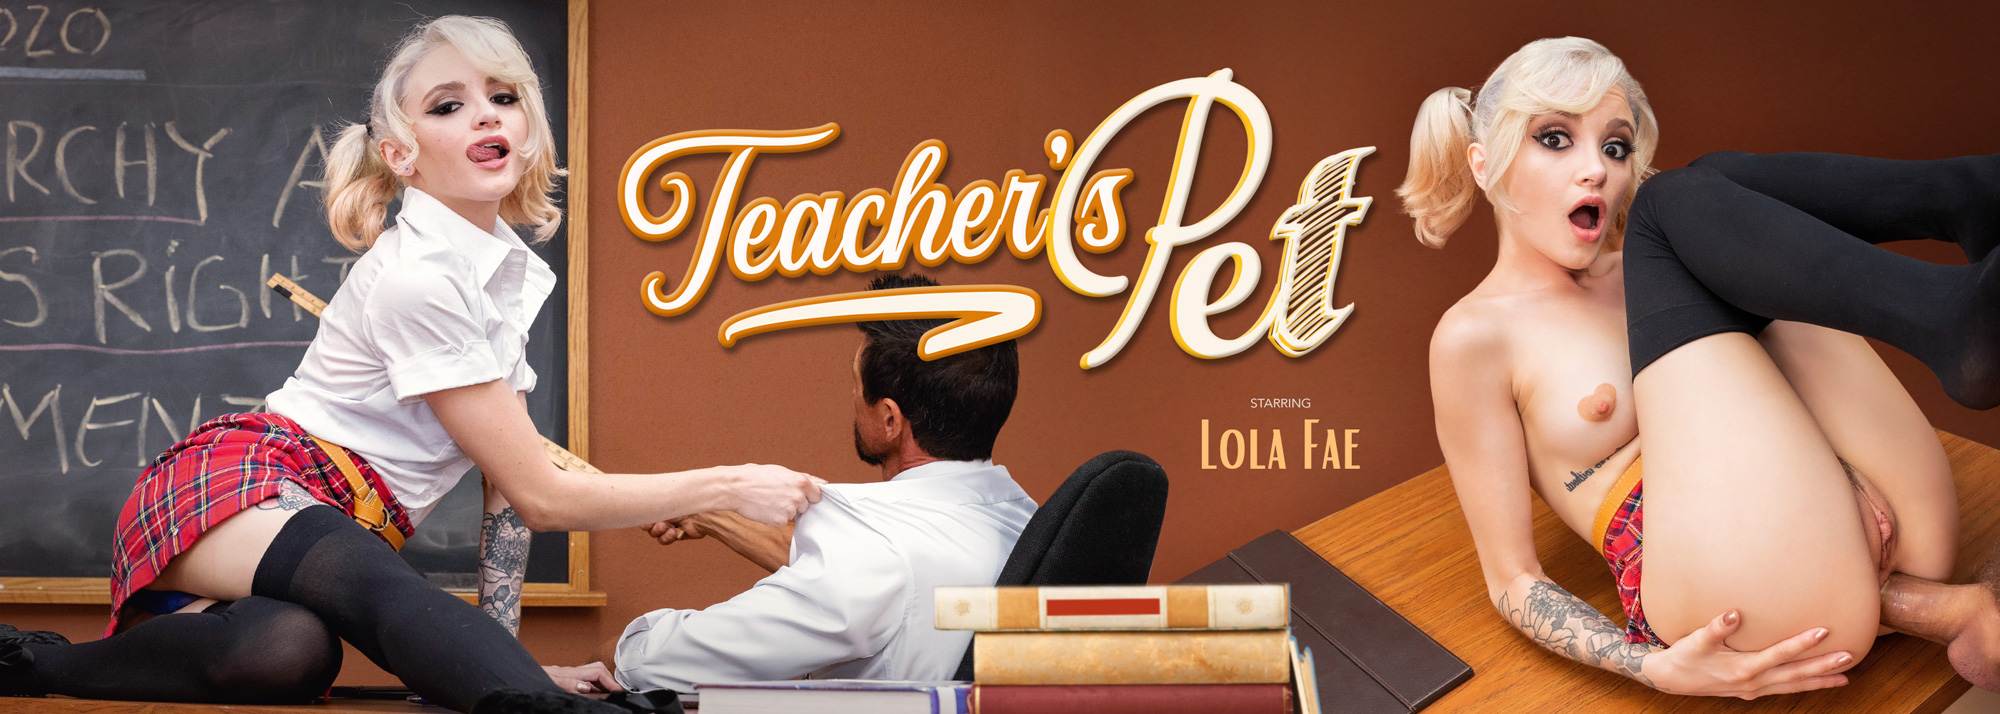 Teacher's Pet with Lola Fae  Slideshow